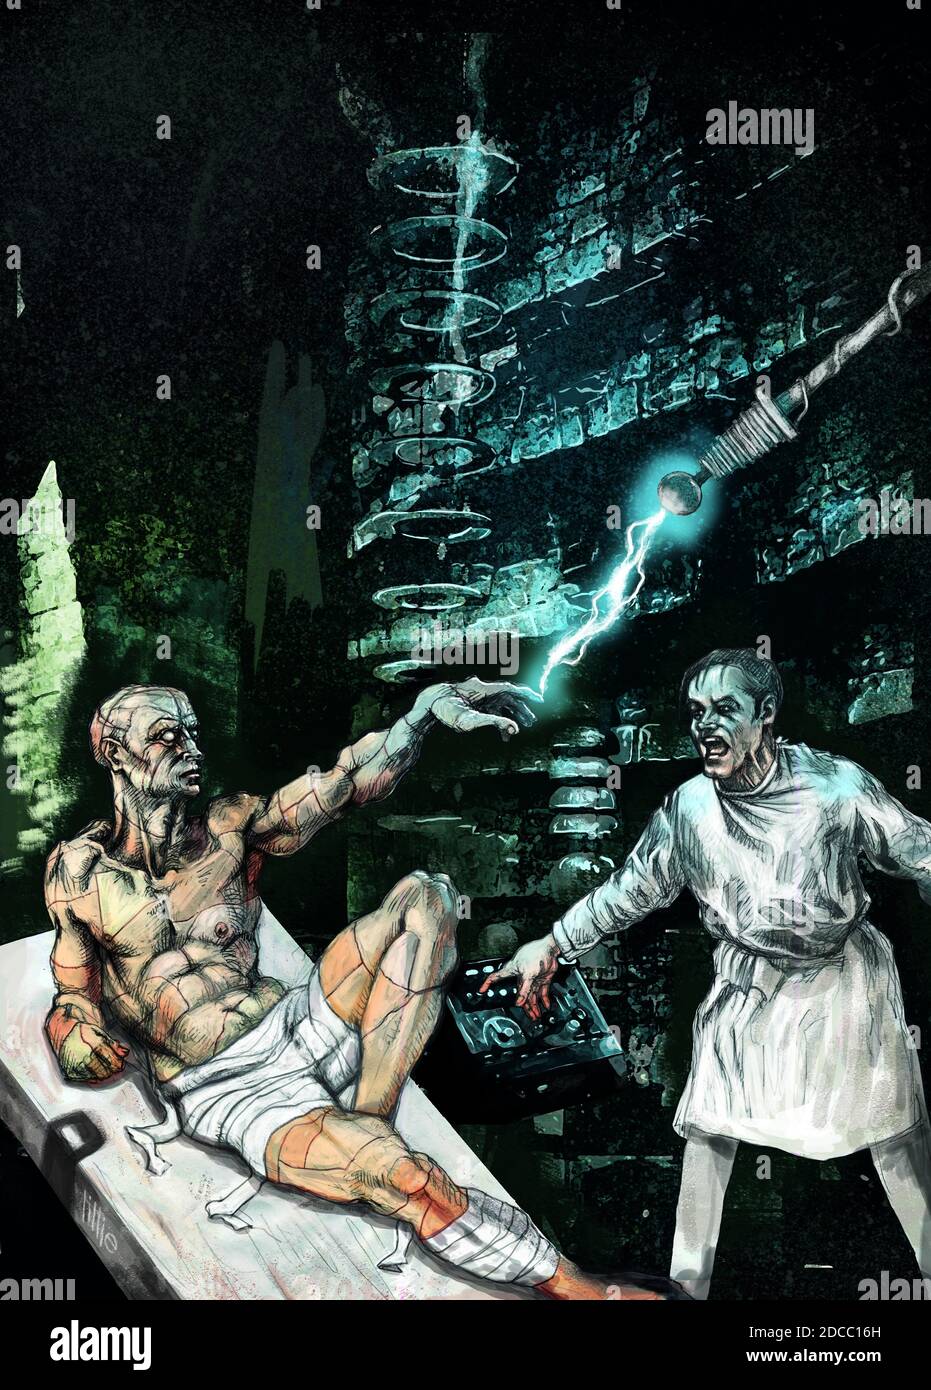 Art illustration inspired by Frankenstein Universal Horror film (90th anniversary 2021) & Michelangelo Creation of Adam life death playing God ethics. Stock Photo